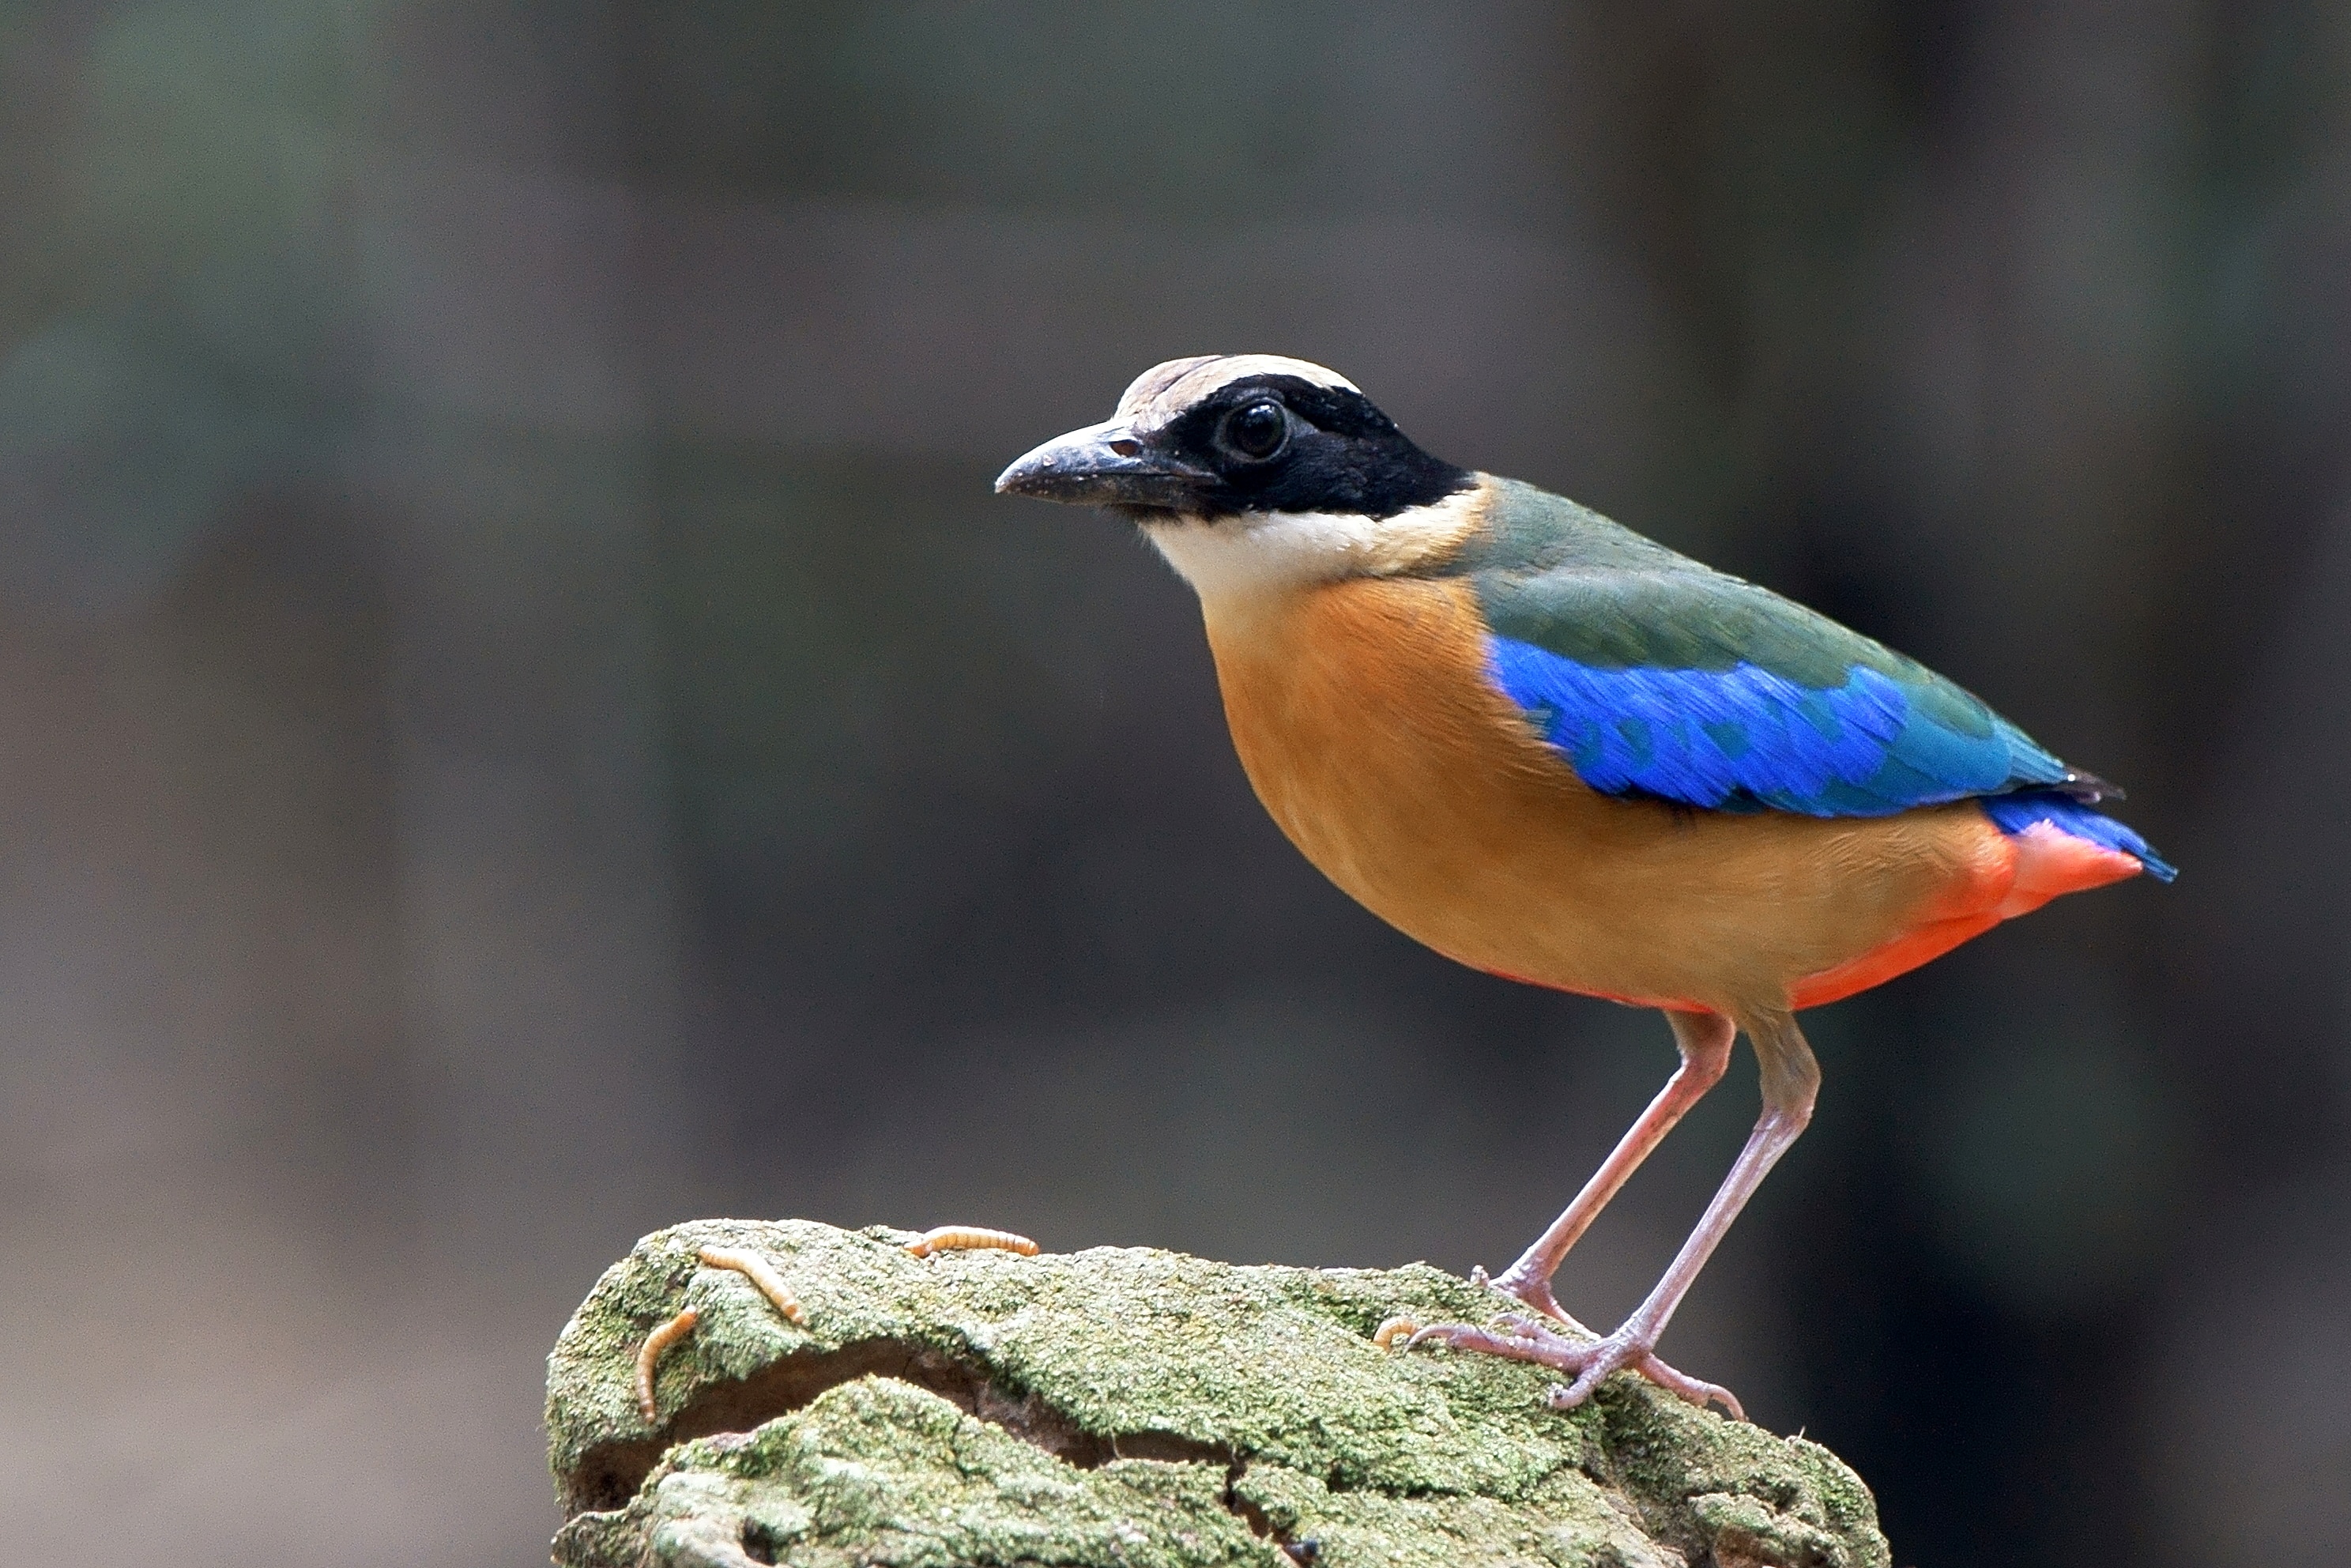 tricolor small beak bird